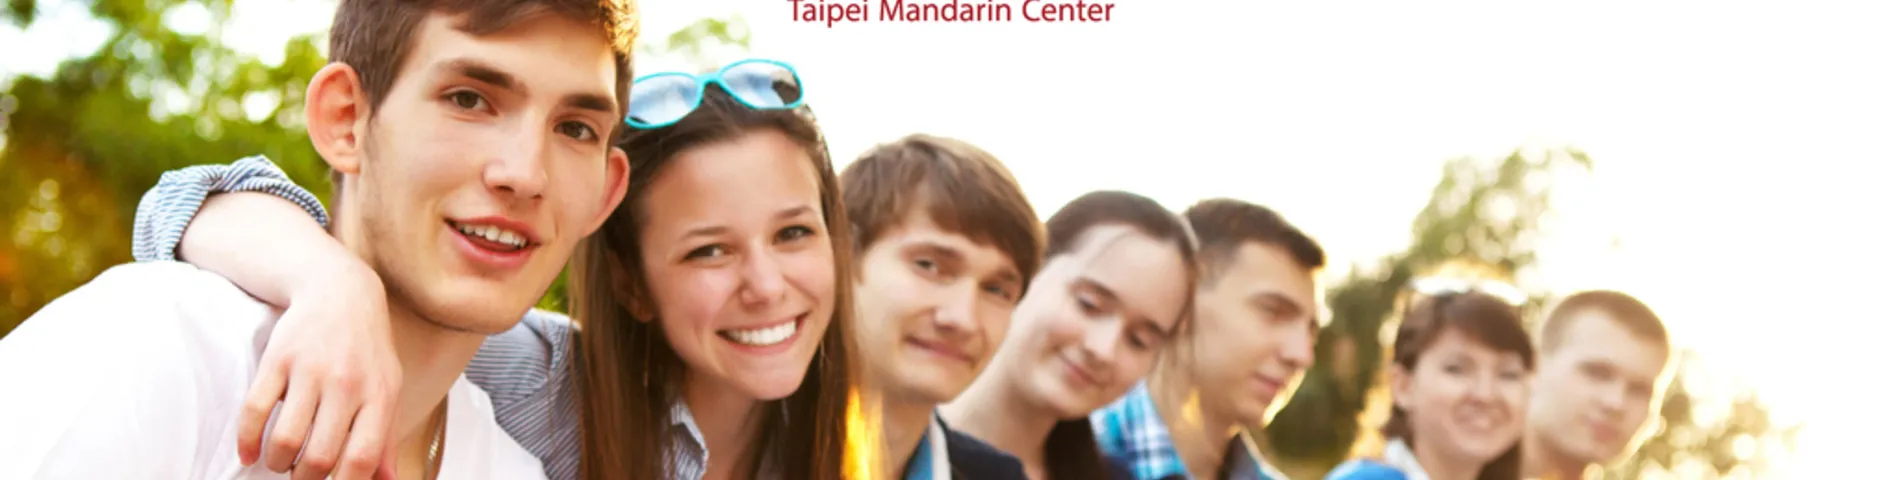 TMC - Taipei Mandarin Center obrazek 1